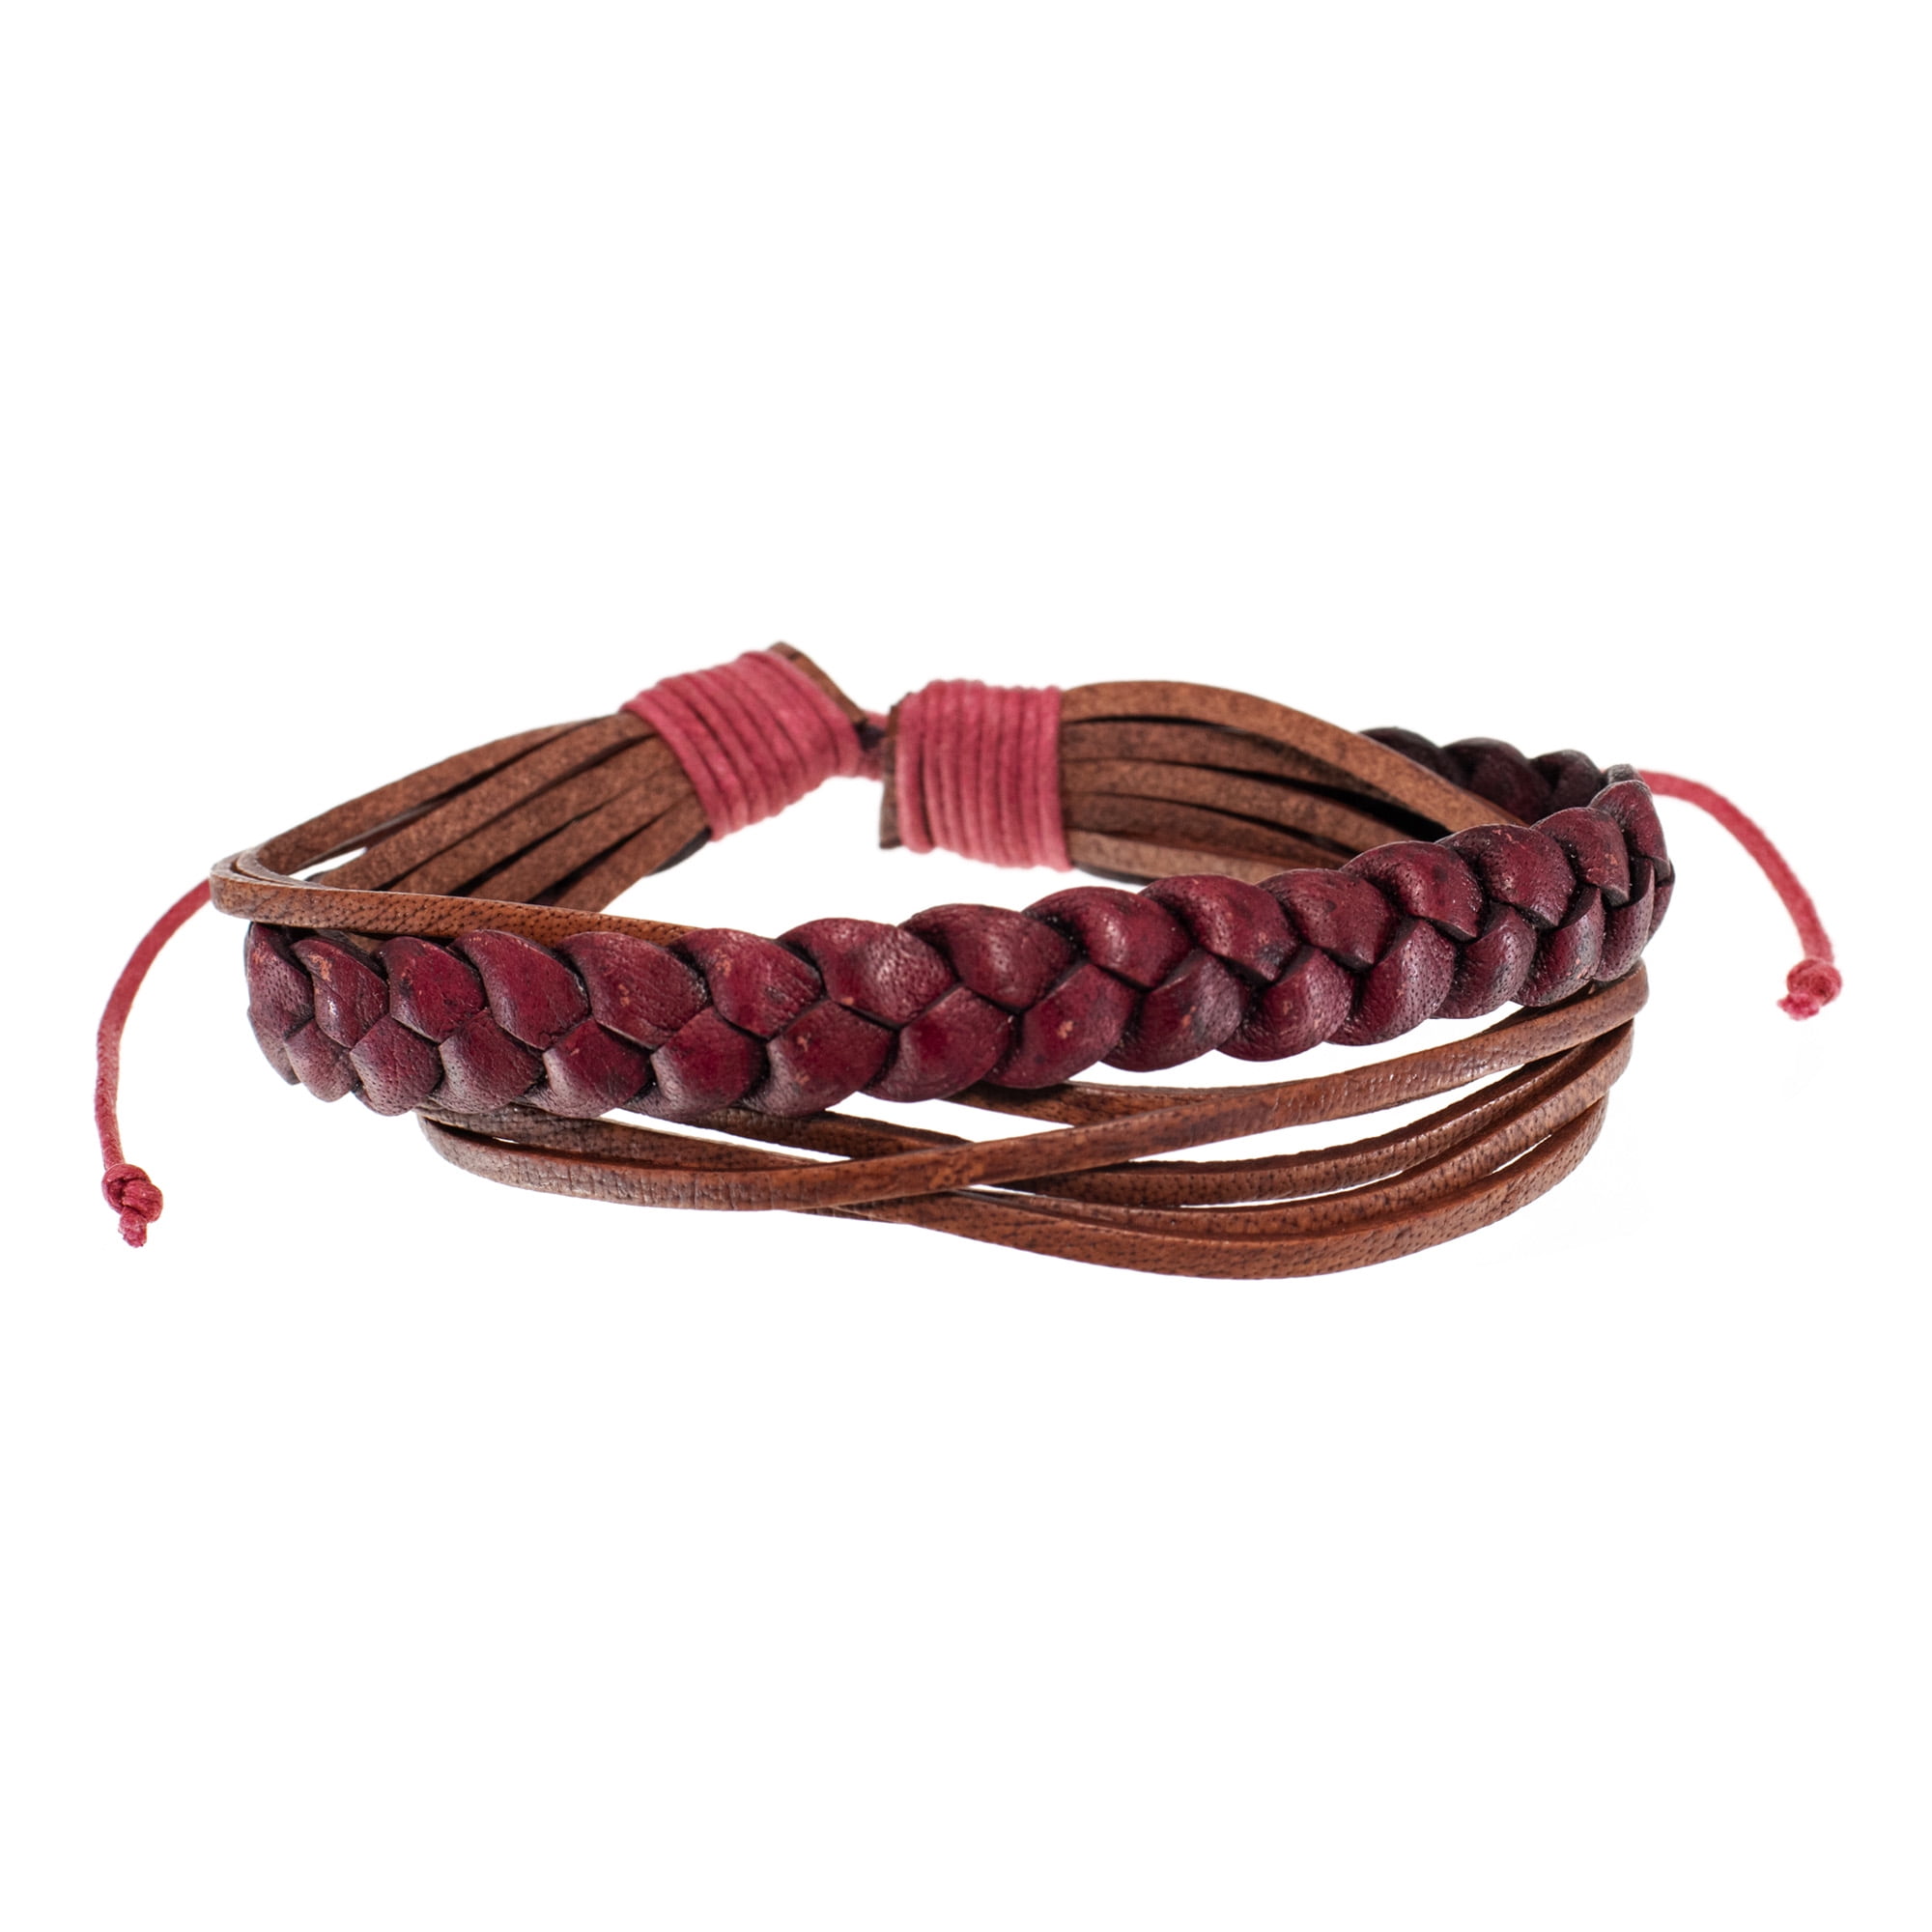 unisex bracelet fashion bracelet red and white bracelet bead bracelet Multi strands braided bracelet leather bracelet